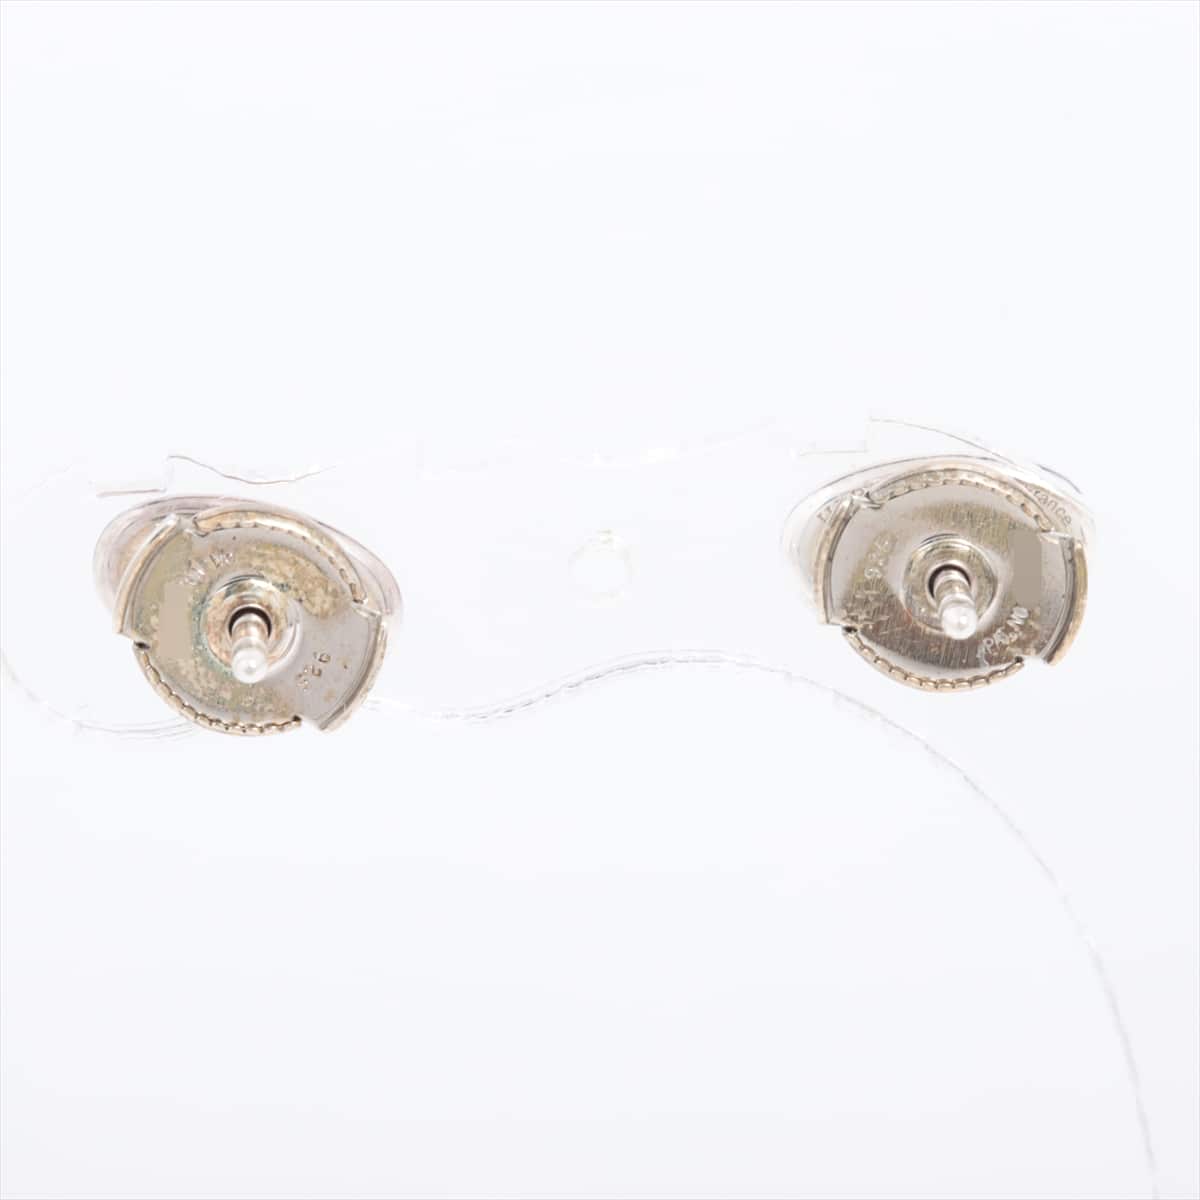 Hermès Chaîne d'Ancre Piercing jewelry (for both ears) 925 1.8g Silver